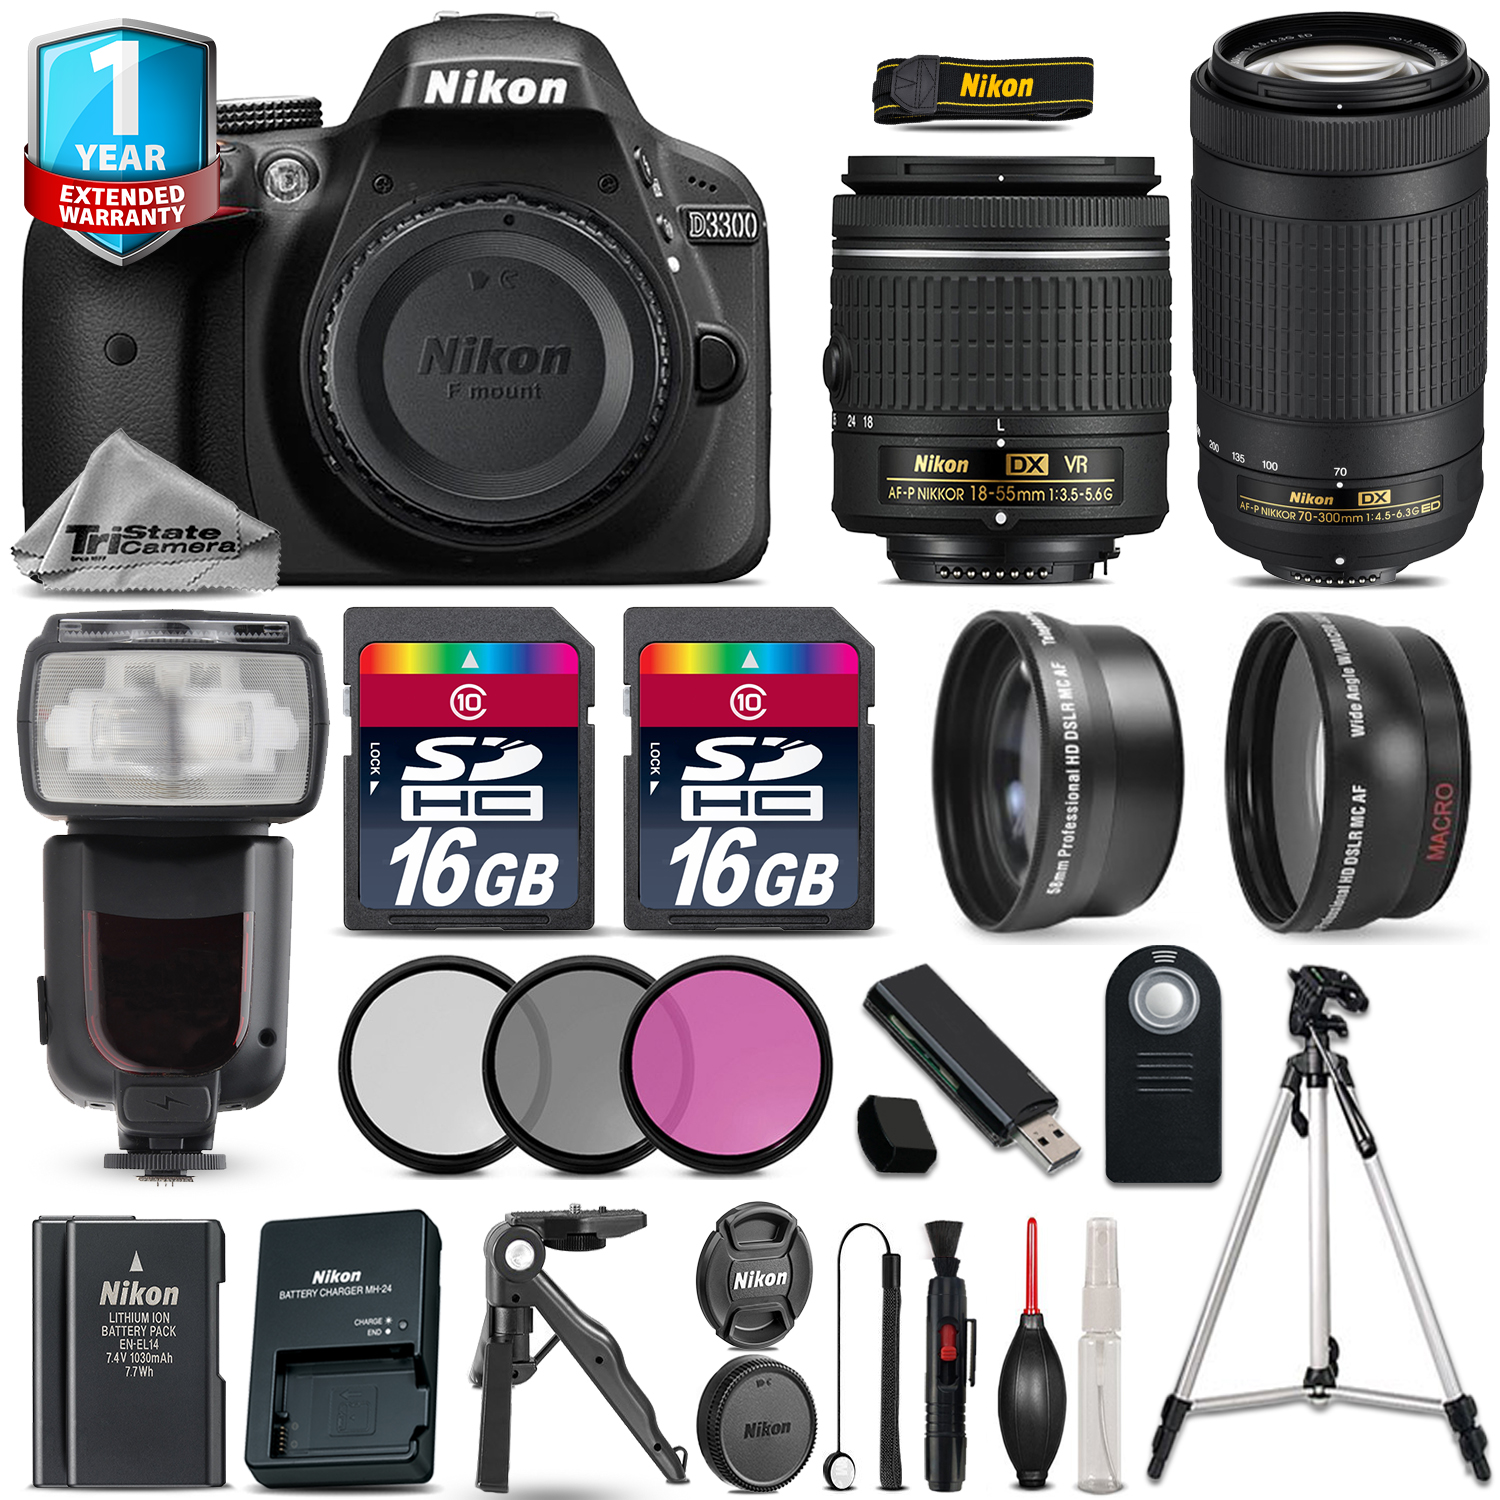 D3300 DSLR Camera + 18-55mm VR + 70-300mm + EXT BAT + Flash + 1yr Warranty *FREE SHIPPING*